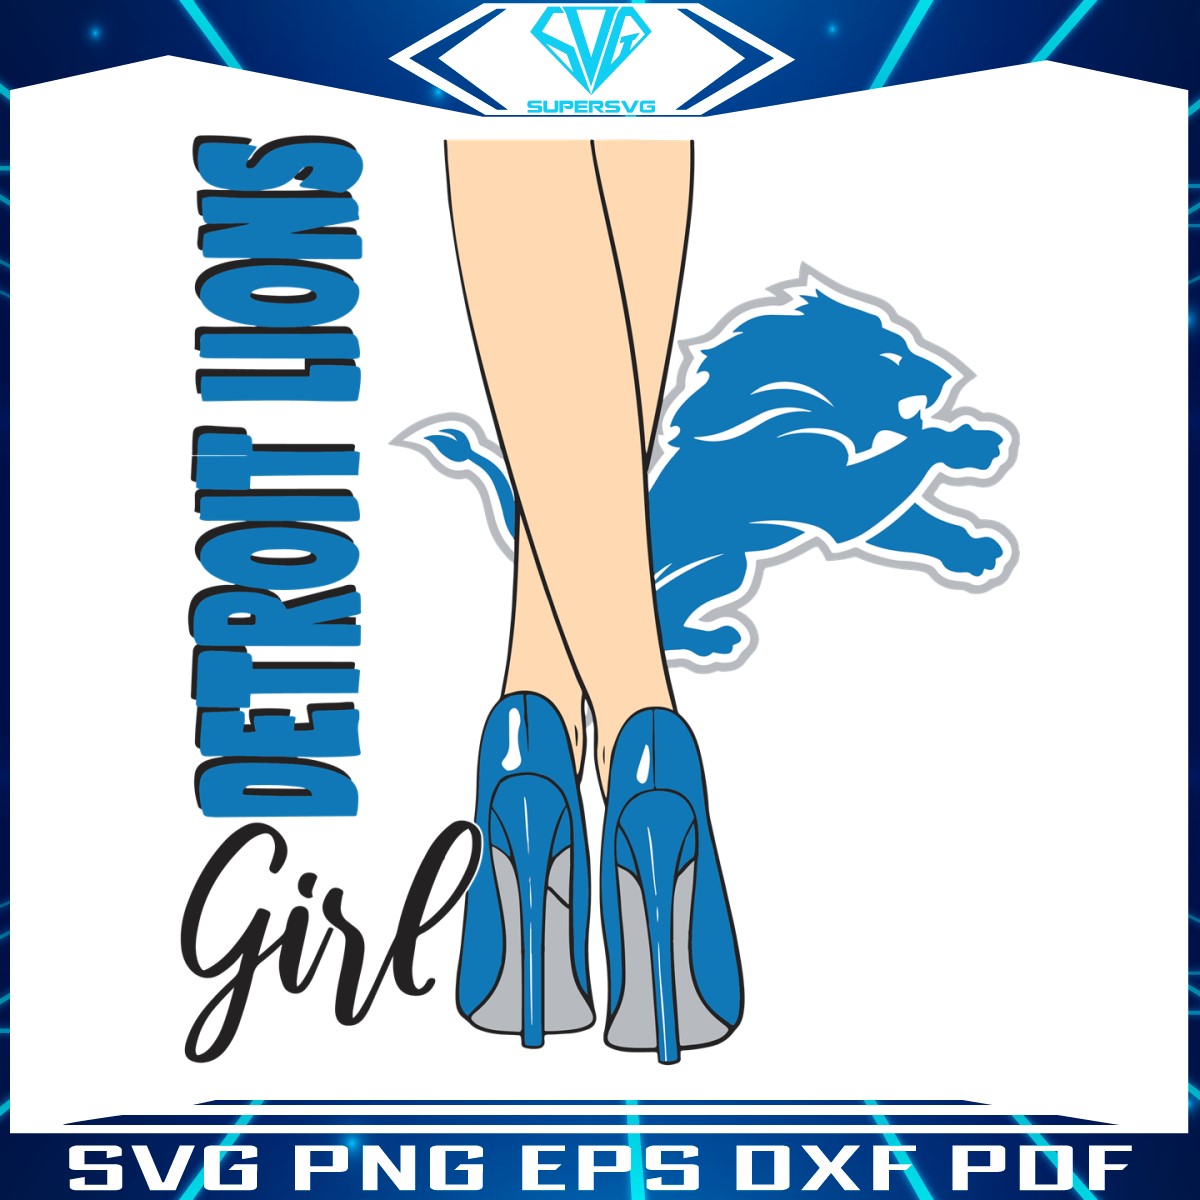 detroit-lions-girl-logo-high-heels-svg